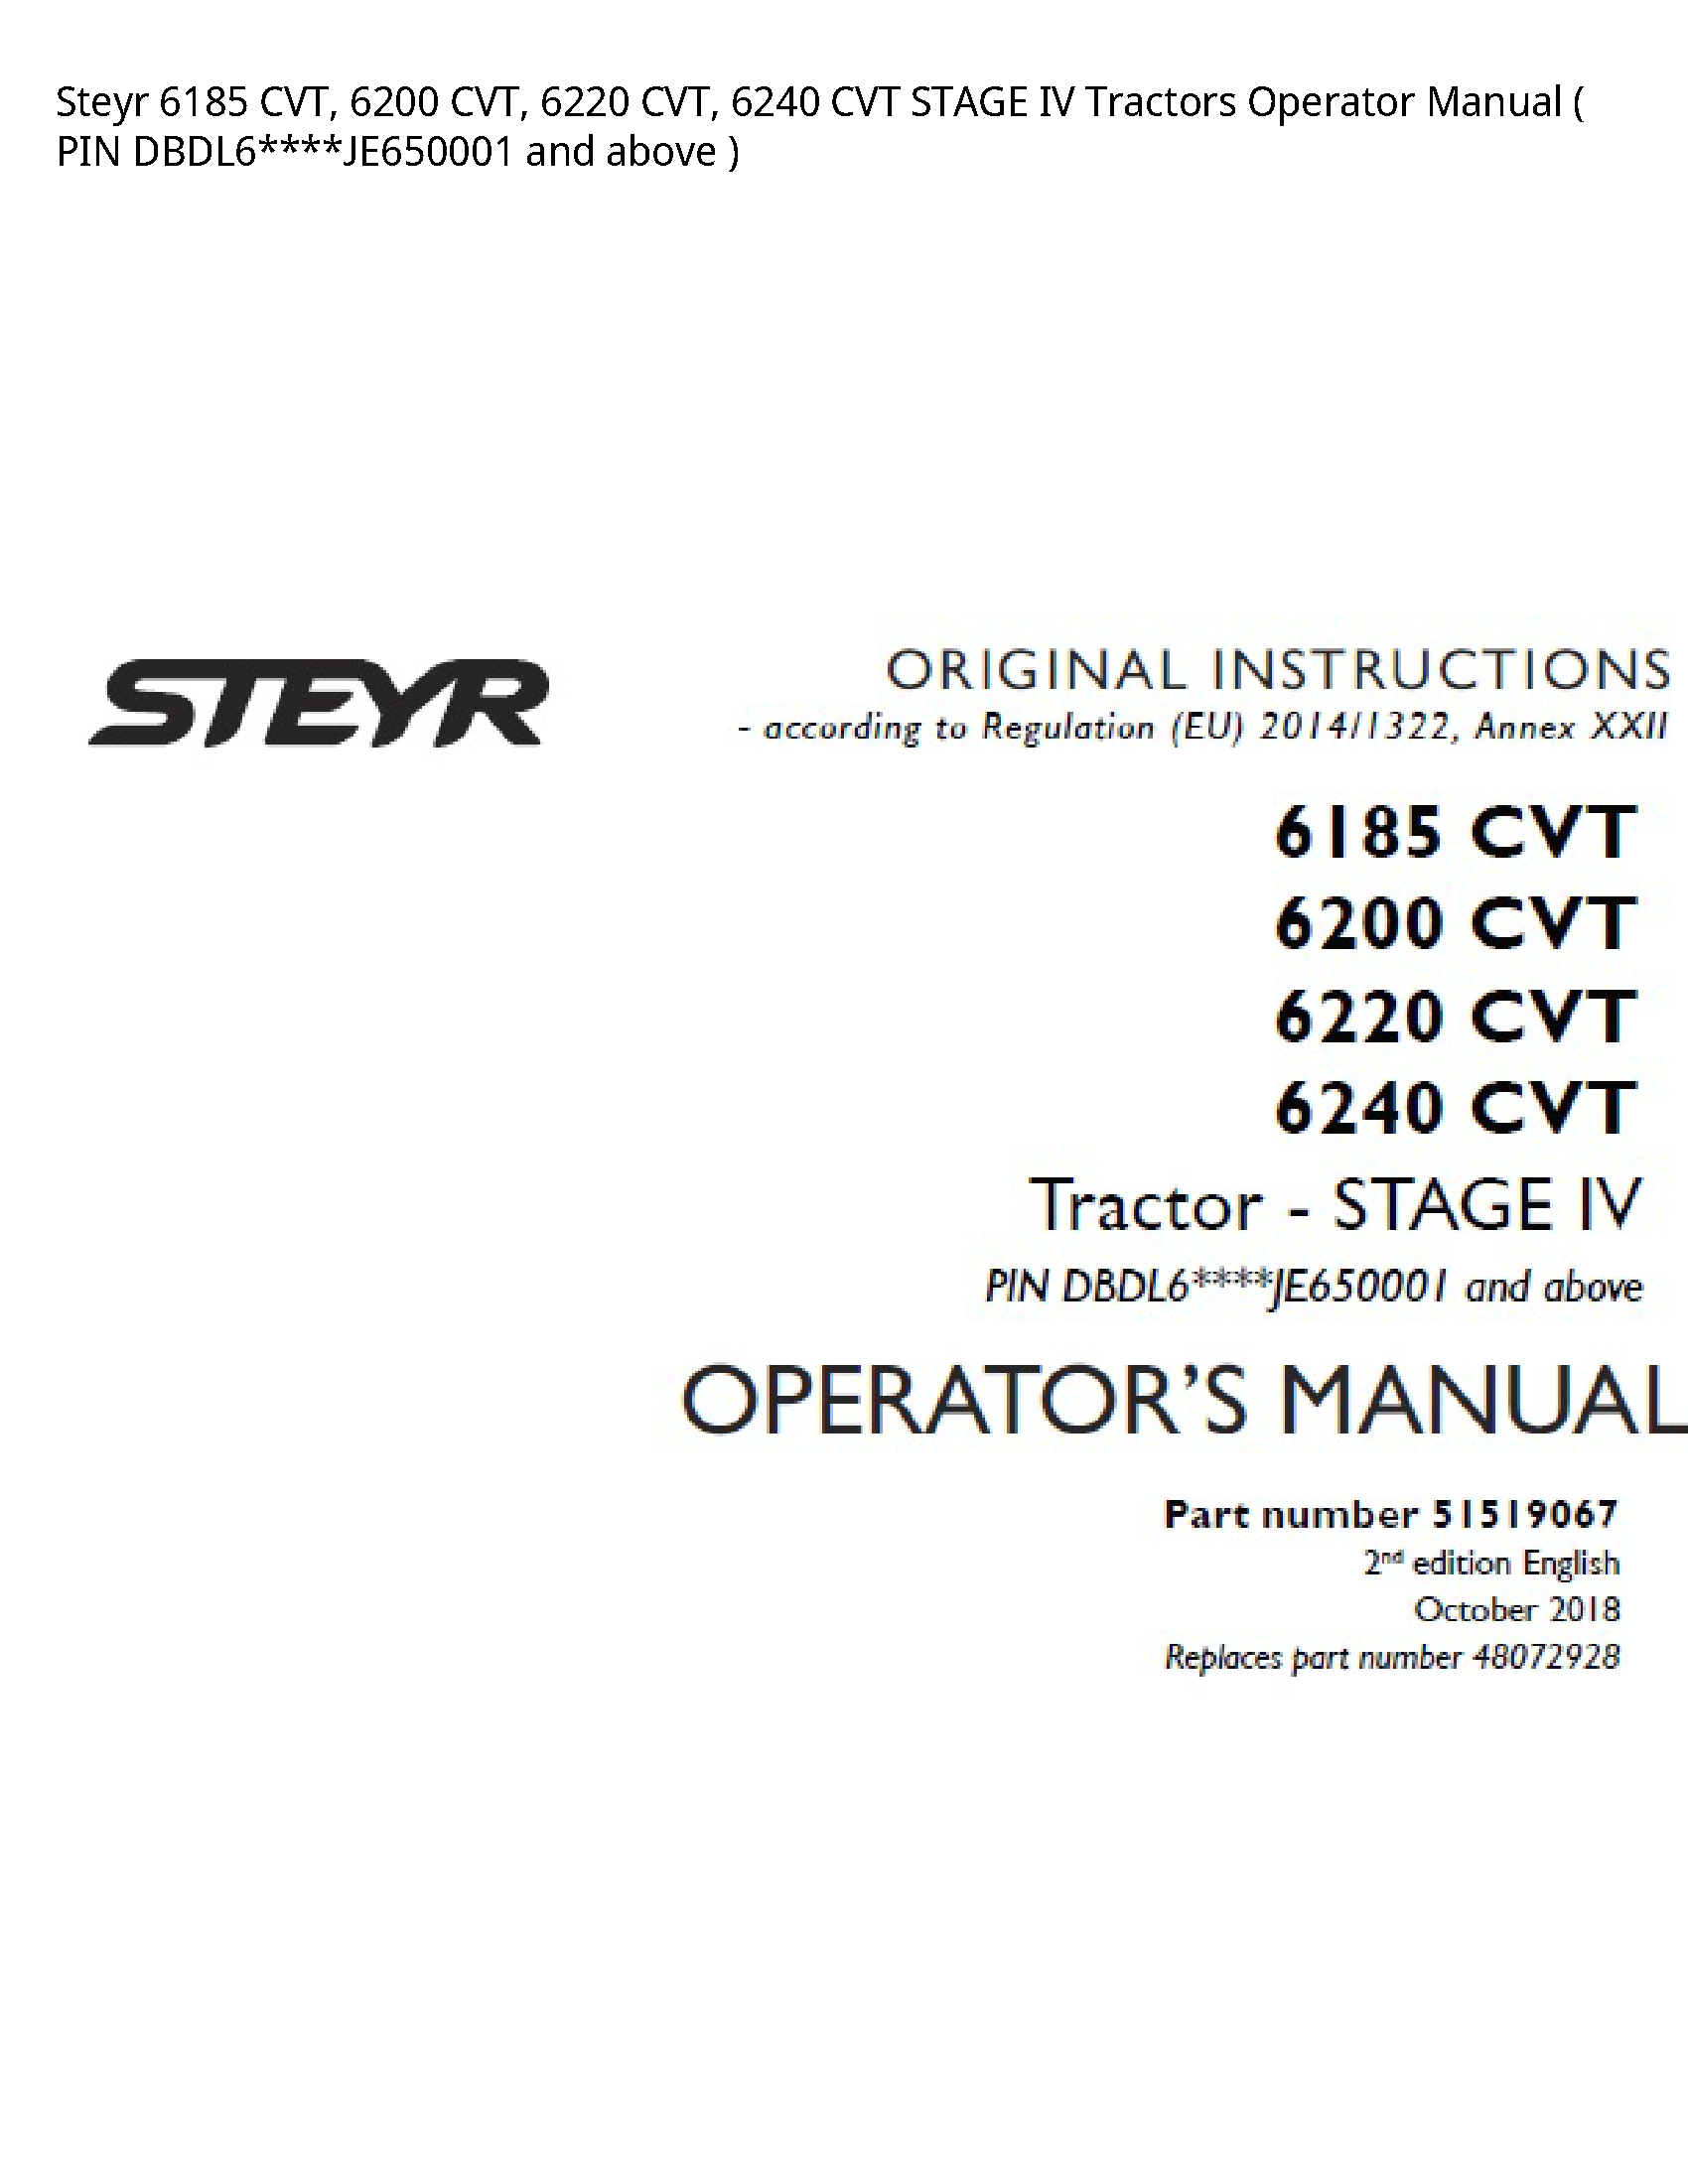 Steyr 6185 CVT manual